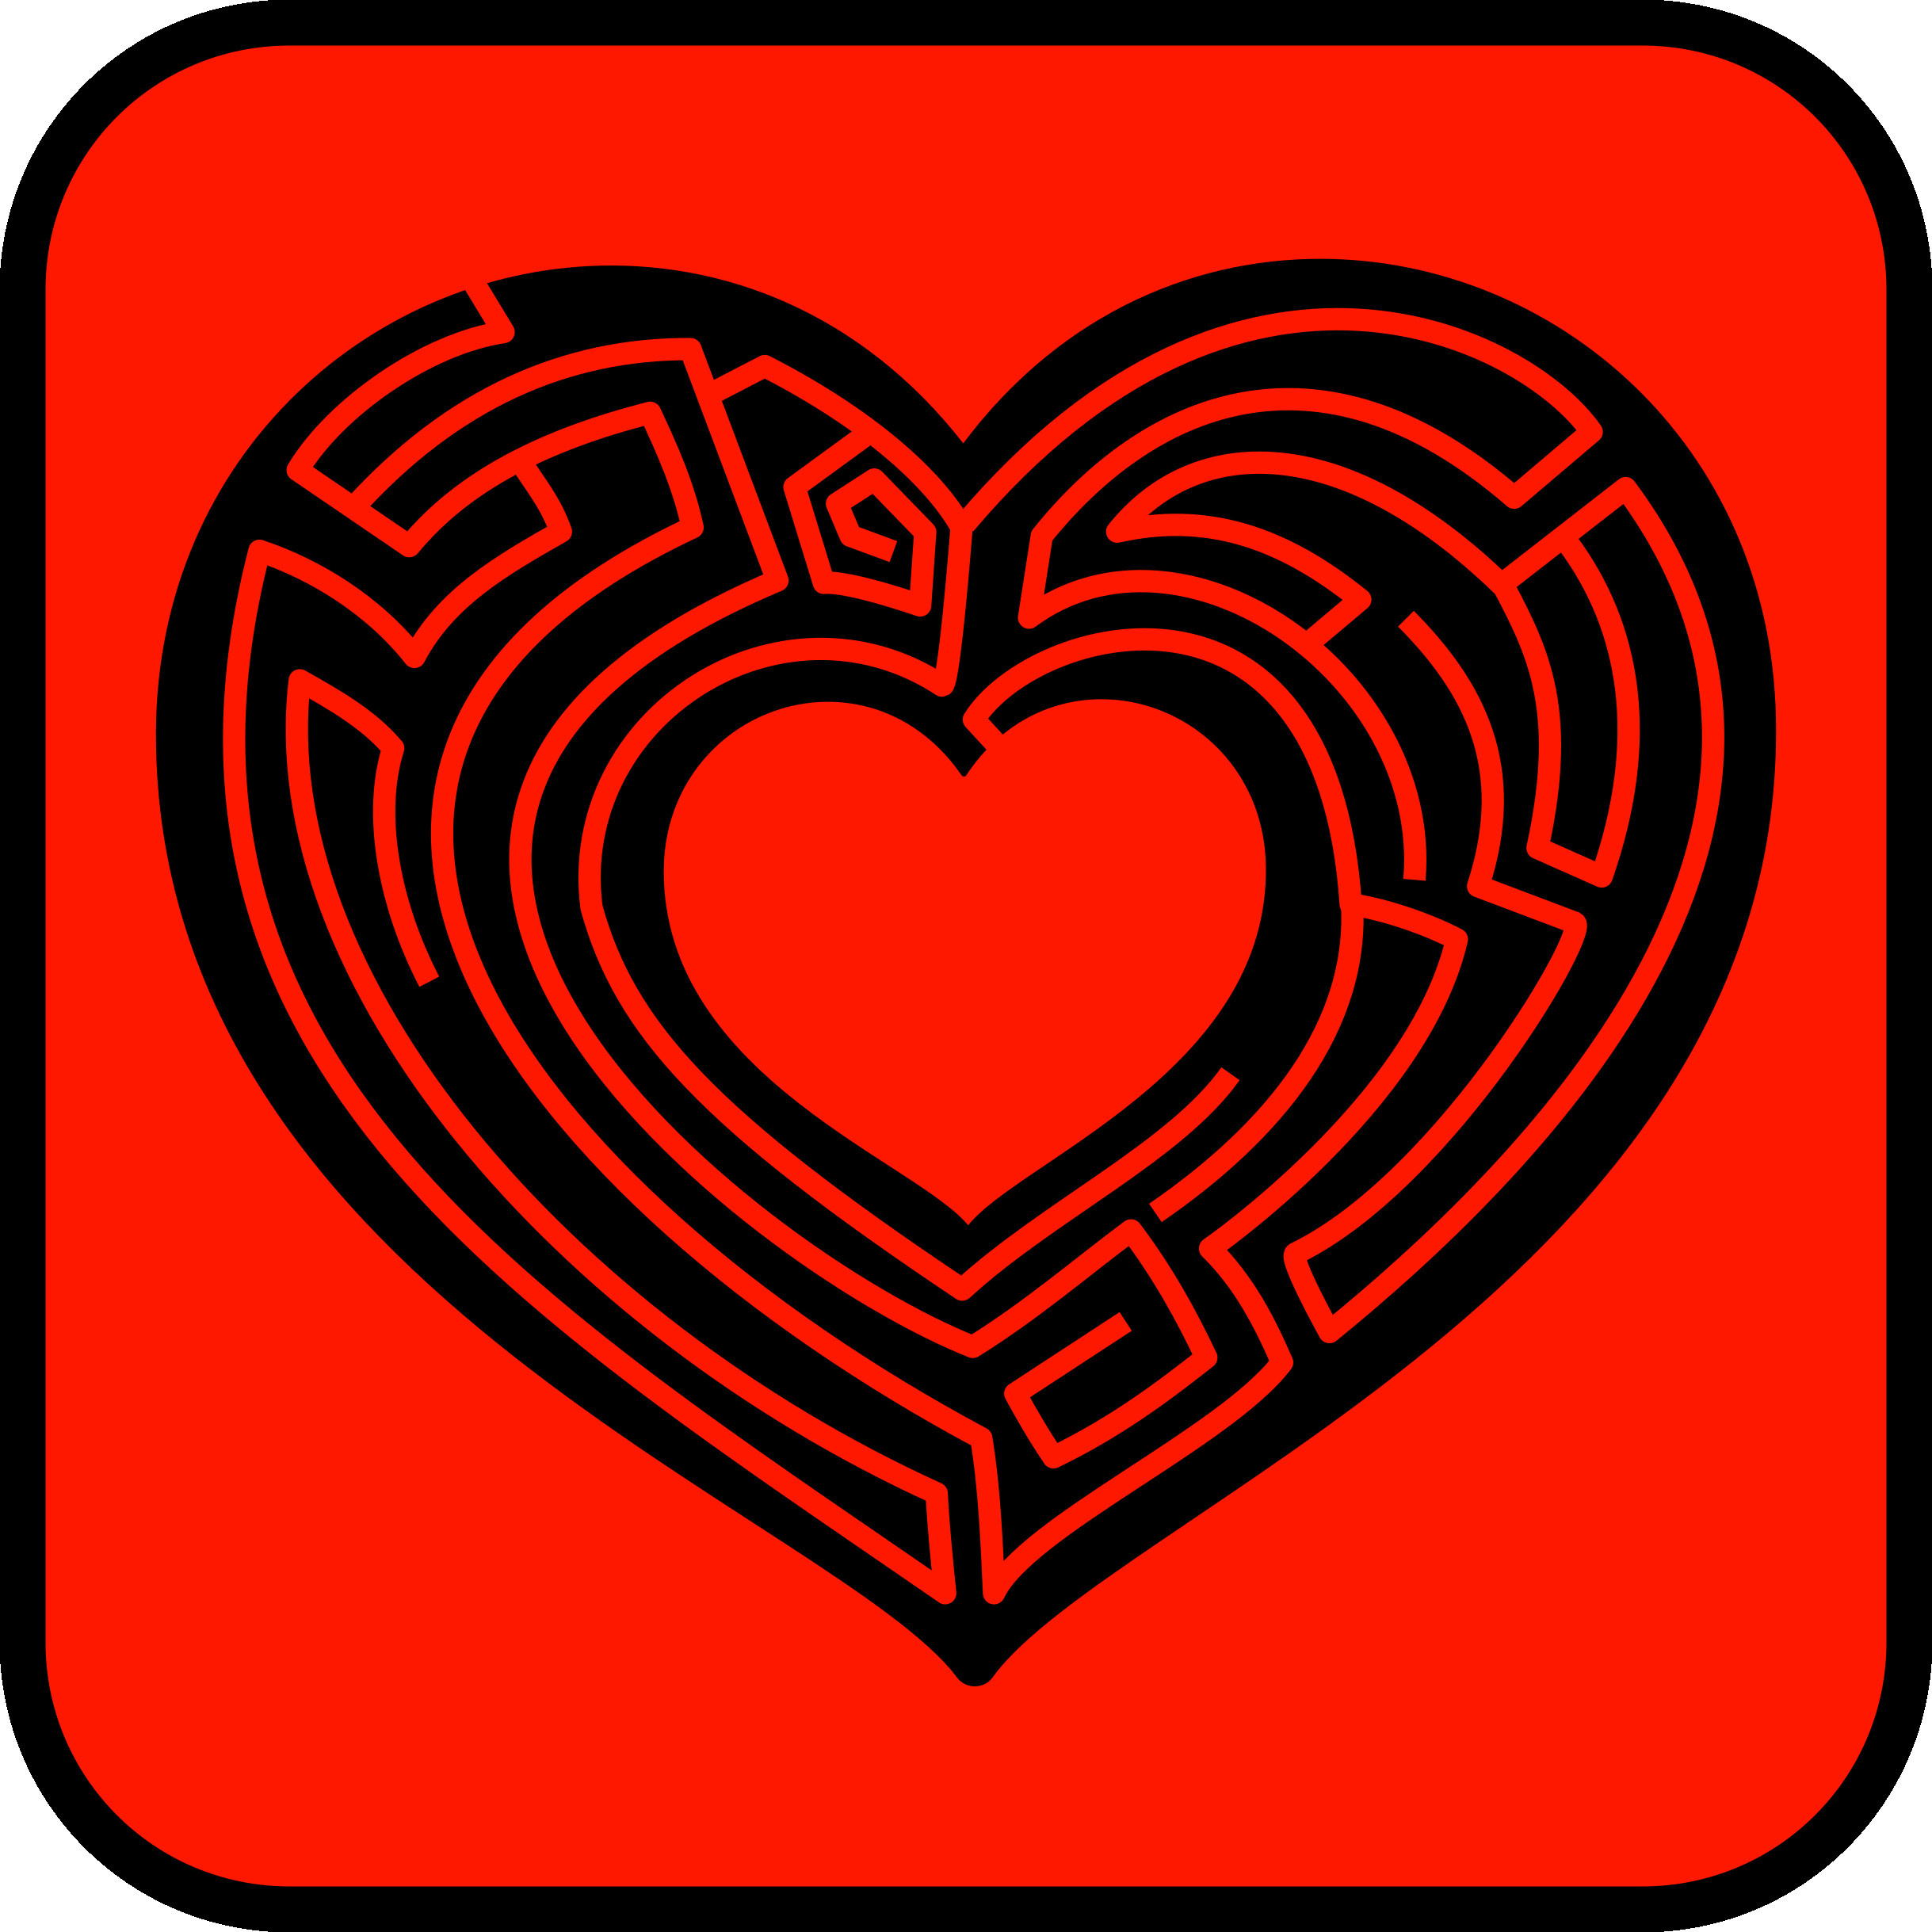 Persona 5: Maze of the Heart